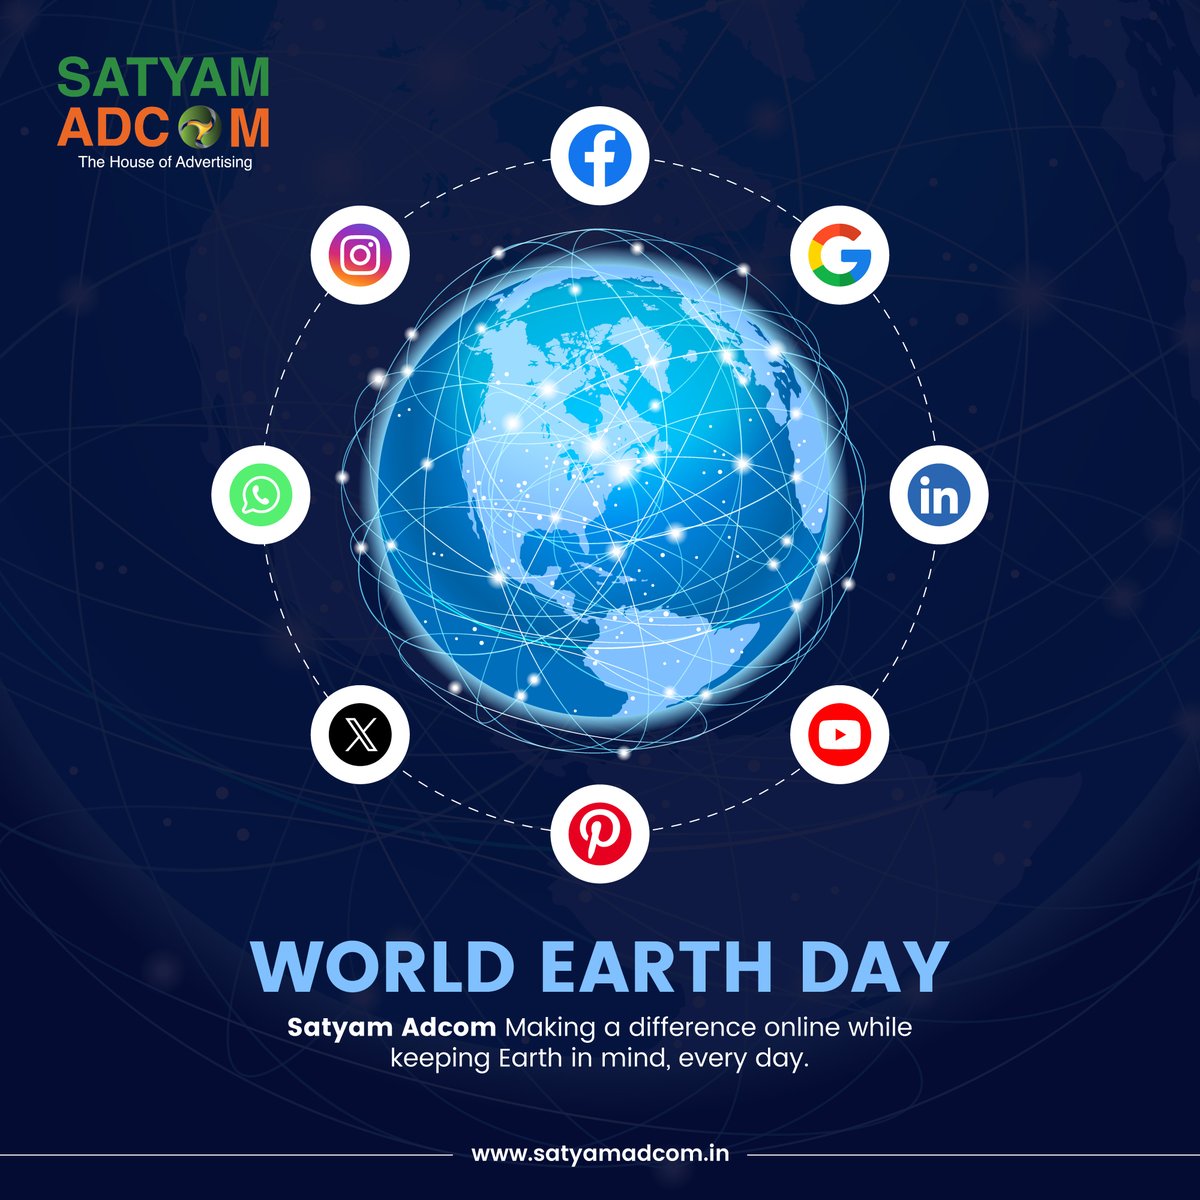 ✨Happy World Earth Day! 🌍💚 Let's prioritize wellness and spread awareness together🫶🏻.
.
.
.
.
.
.
.
.
.
#satyamadcom #WorldEarthDay #earthday #brand #digitalmarketing #marketing #businessowner #owners #business #onlinepresence #online #SocialMediaMagic #tips #businesstips